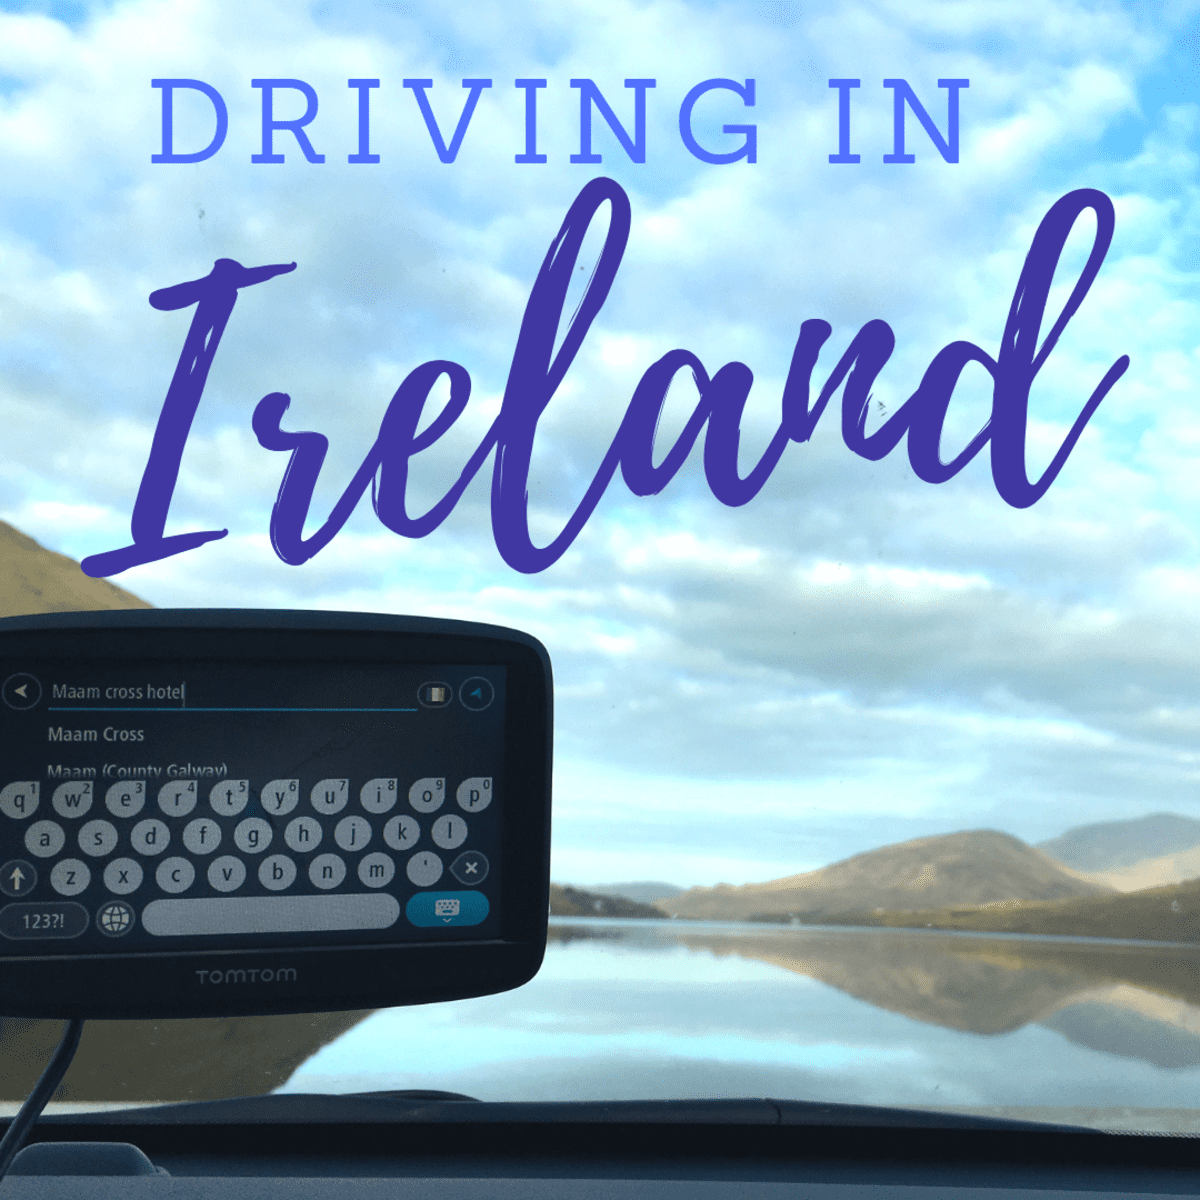 Driving in Ireland